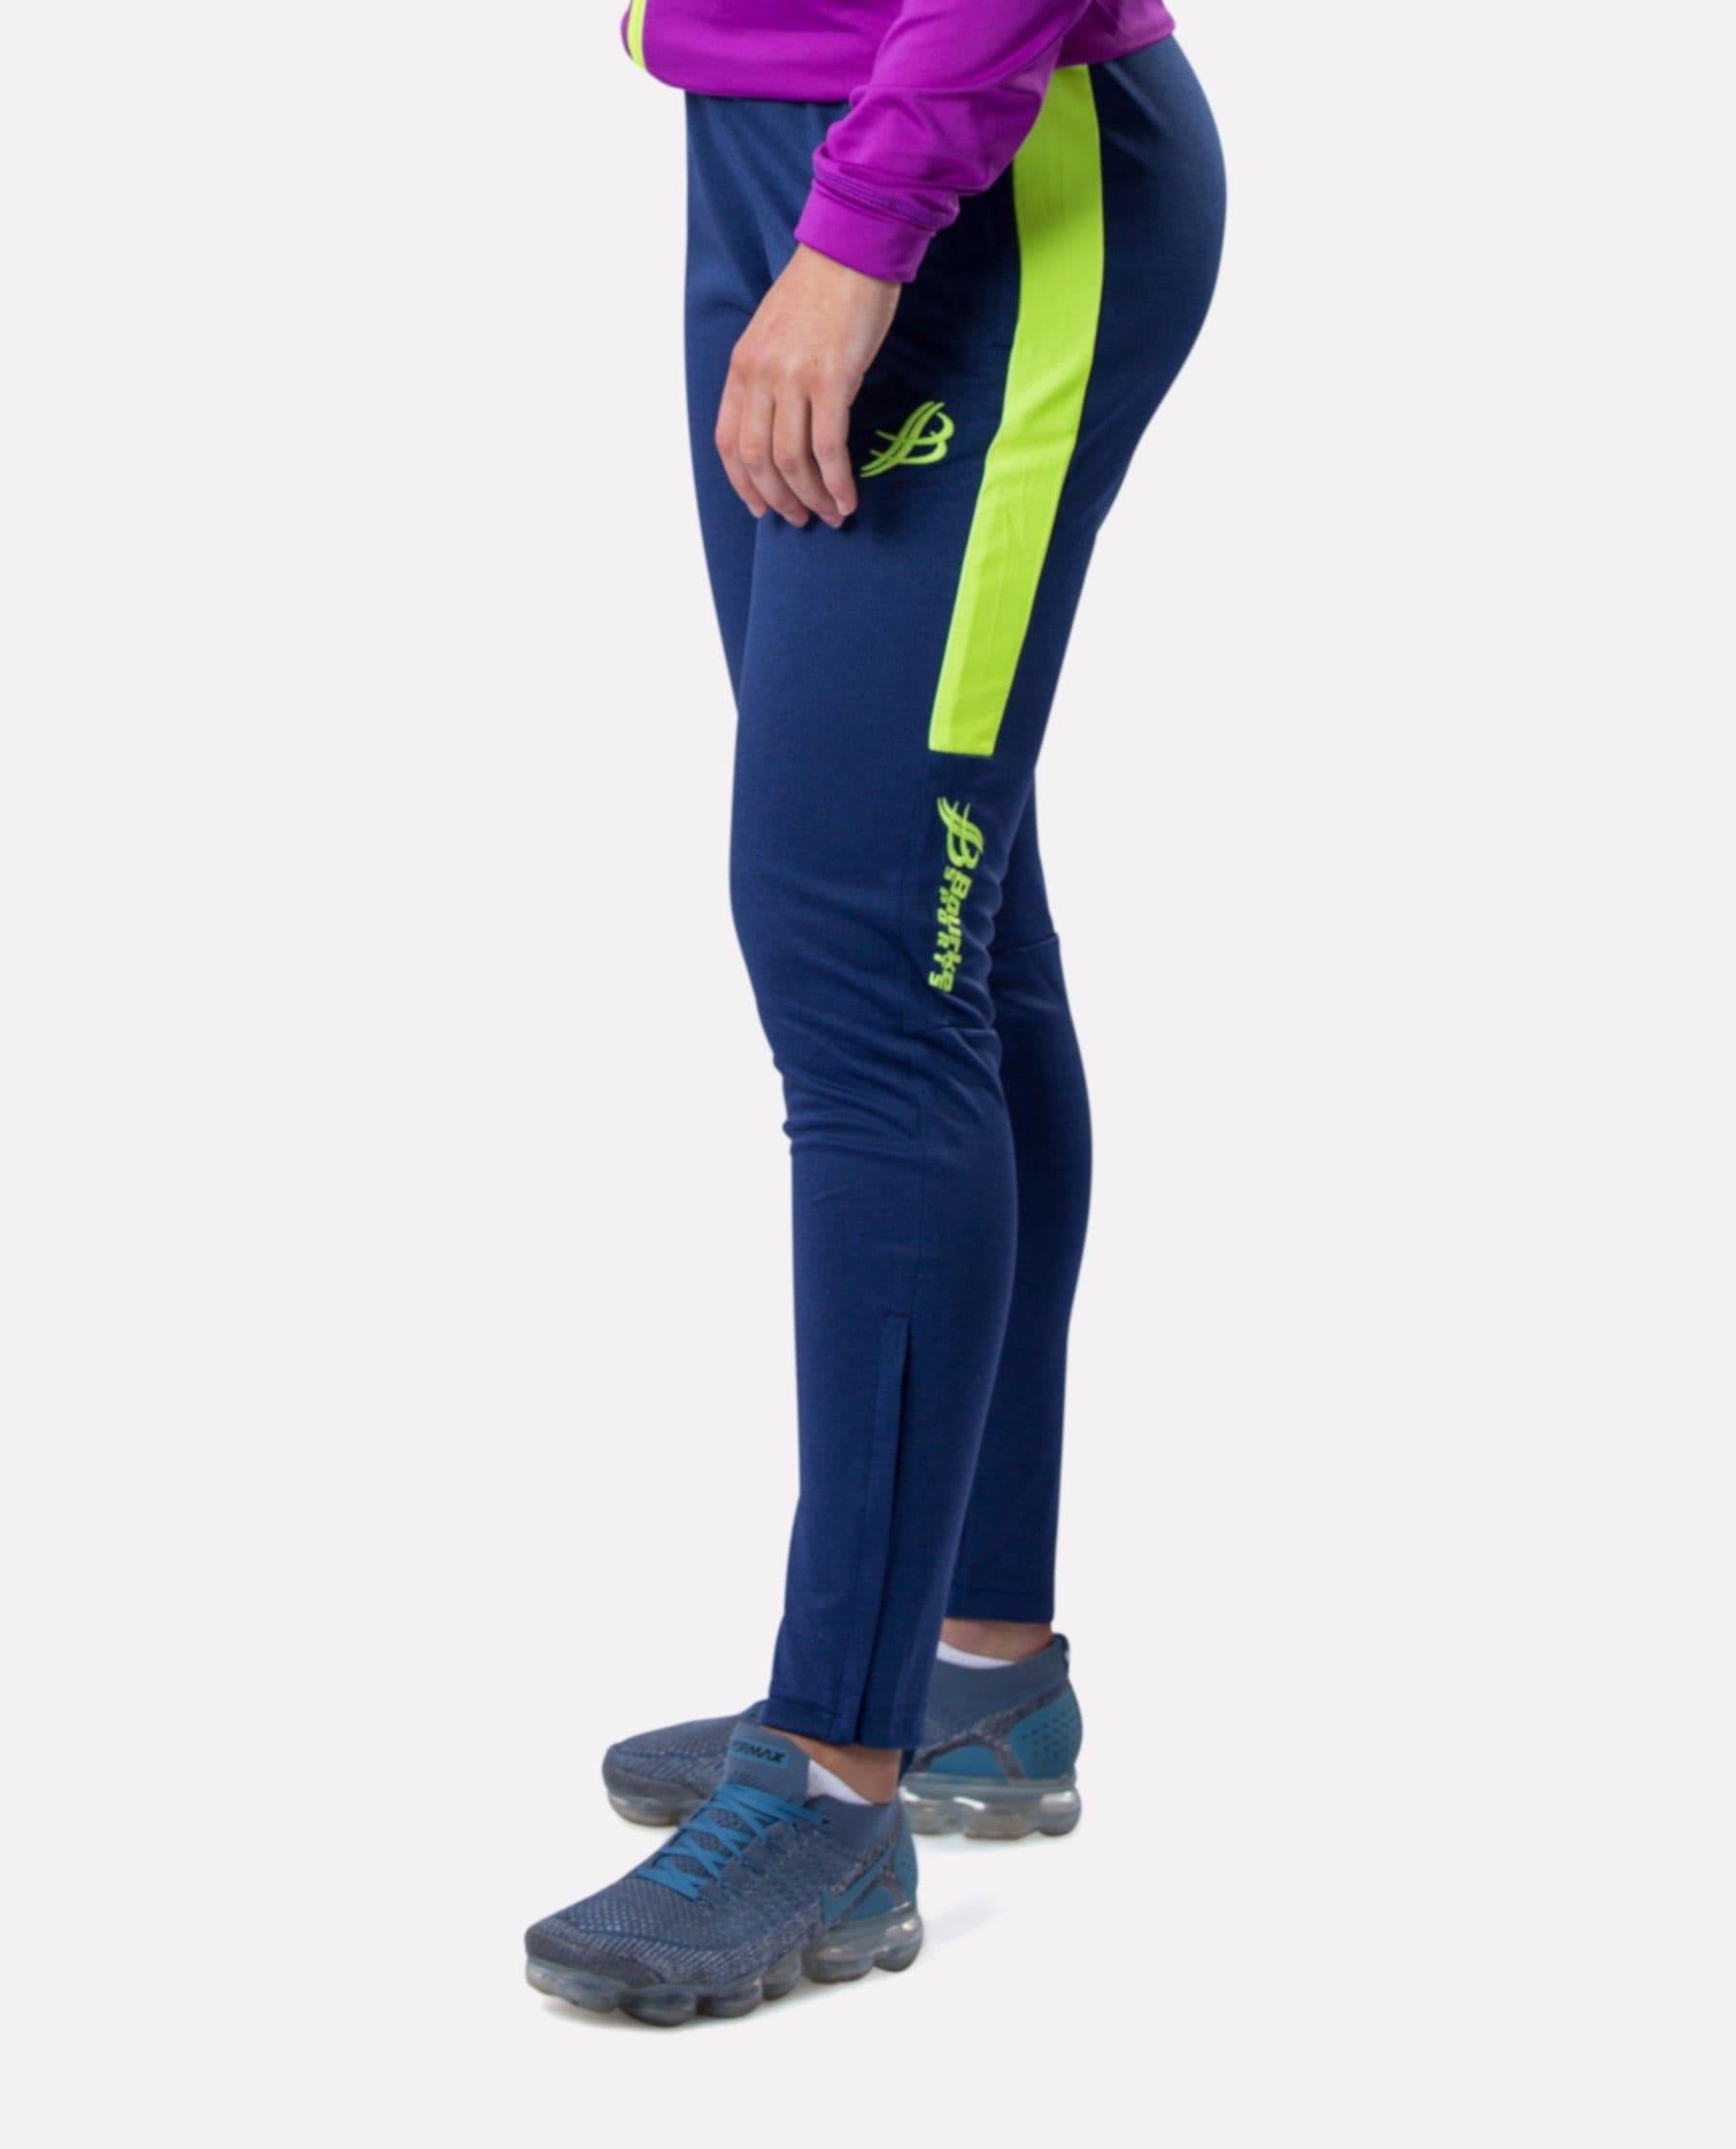 ALPHA Kids Skinny Pants (Navy/Luminous) - Bourke Sports Limited